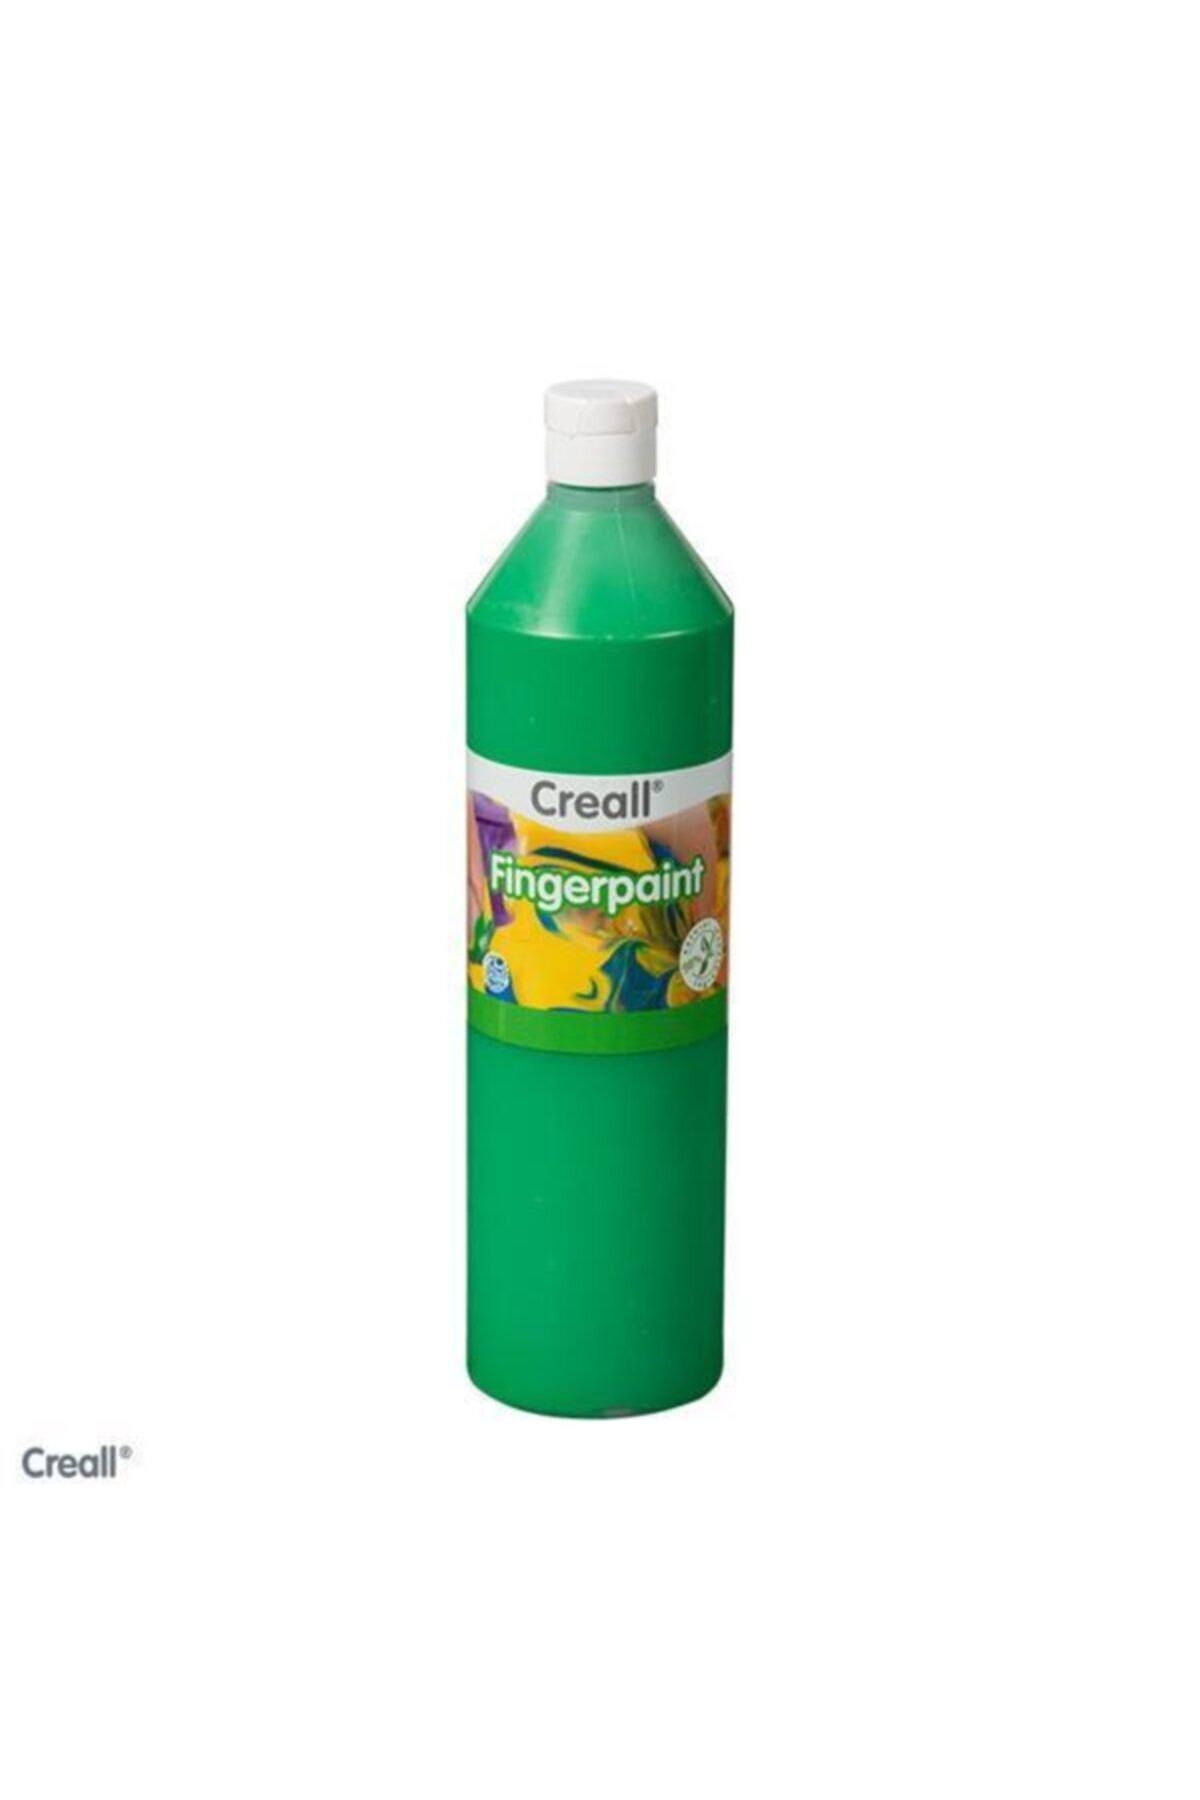 Creall Fingerpaint Parmak Boyası 750 ml. 05 Green (Yeşil)